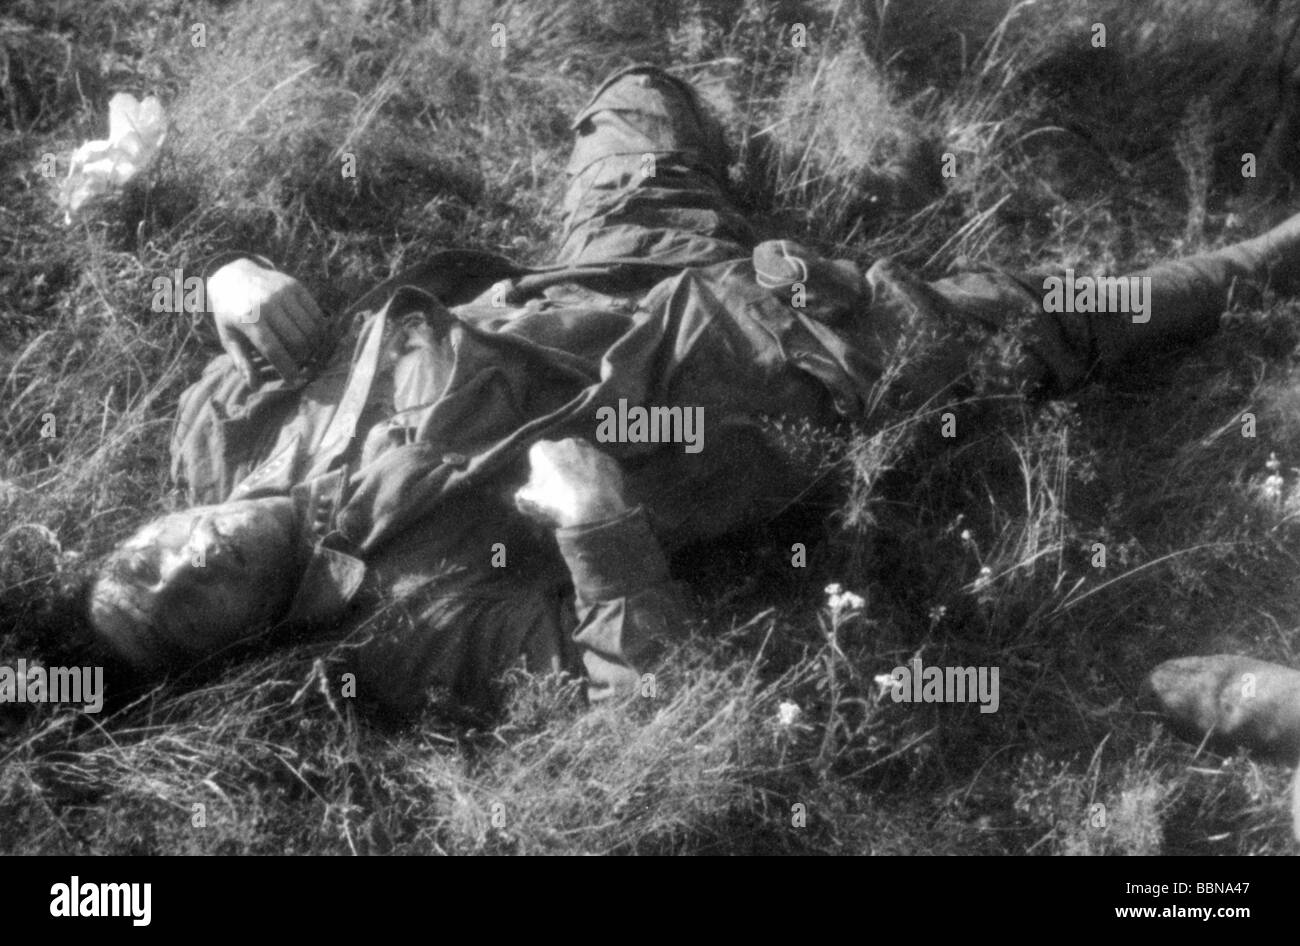 events, Second World War / WWII, Russia, fallen soldiers / dead bodies, fallen Soviet airman, Dukhovshchina near Smolensk, Russia, 26.7.1941, Stock Photo